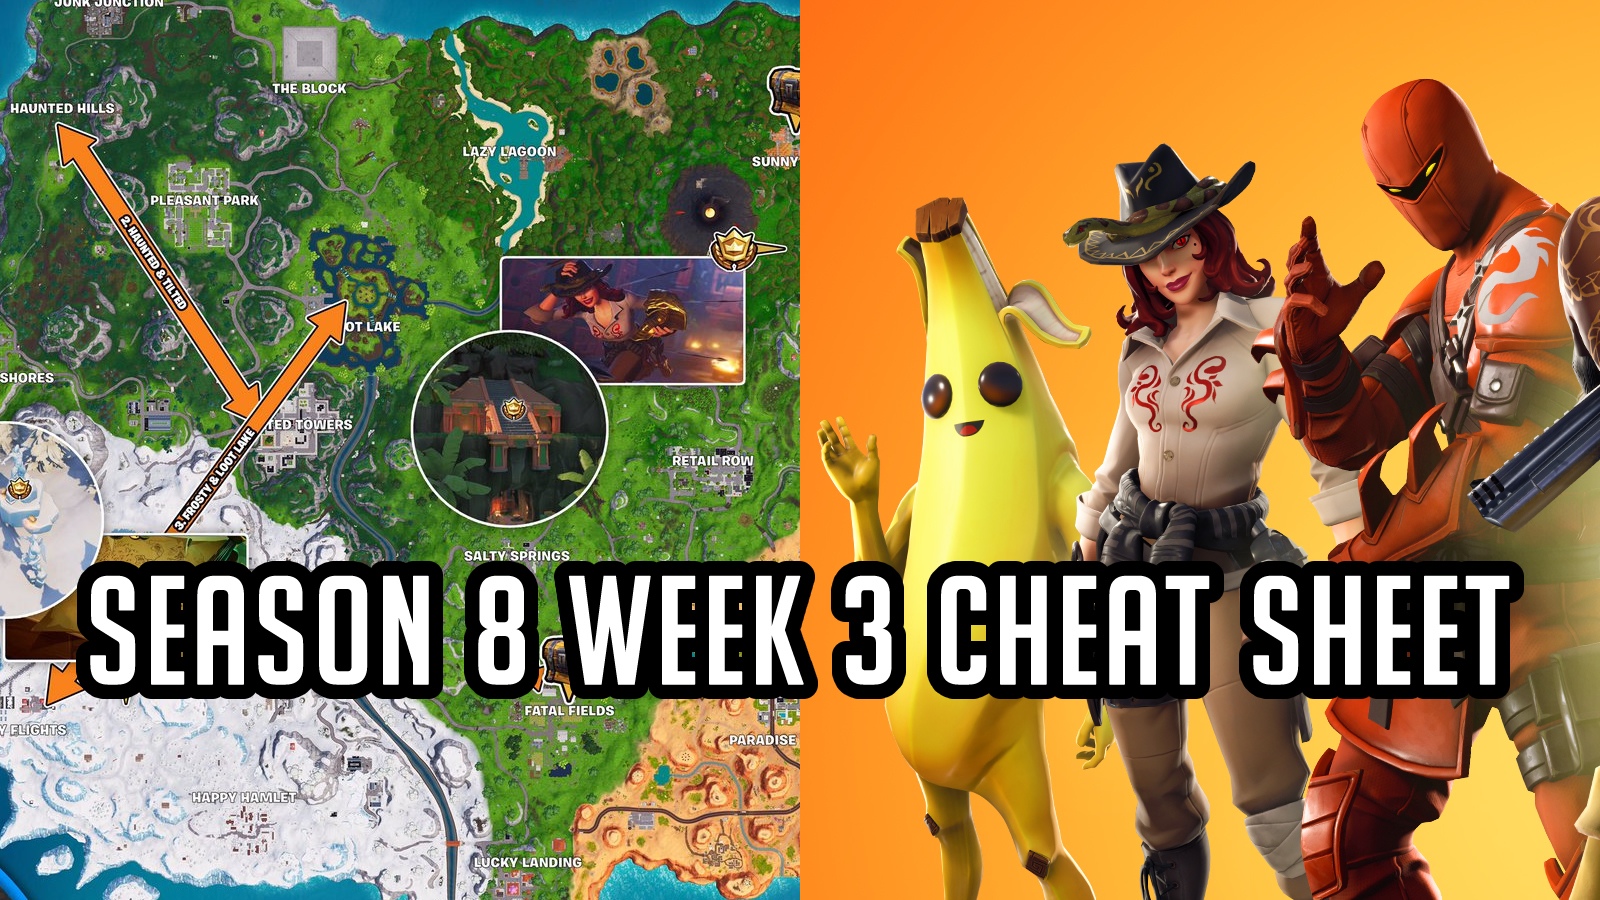  - fortnite week 2 challenges cheat sheet season 8